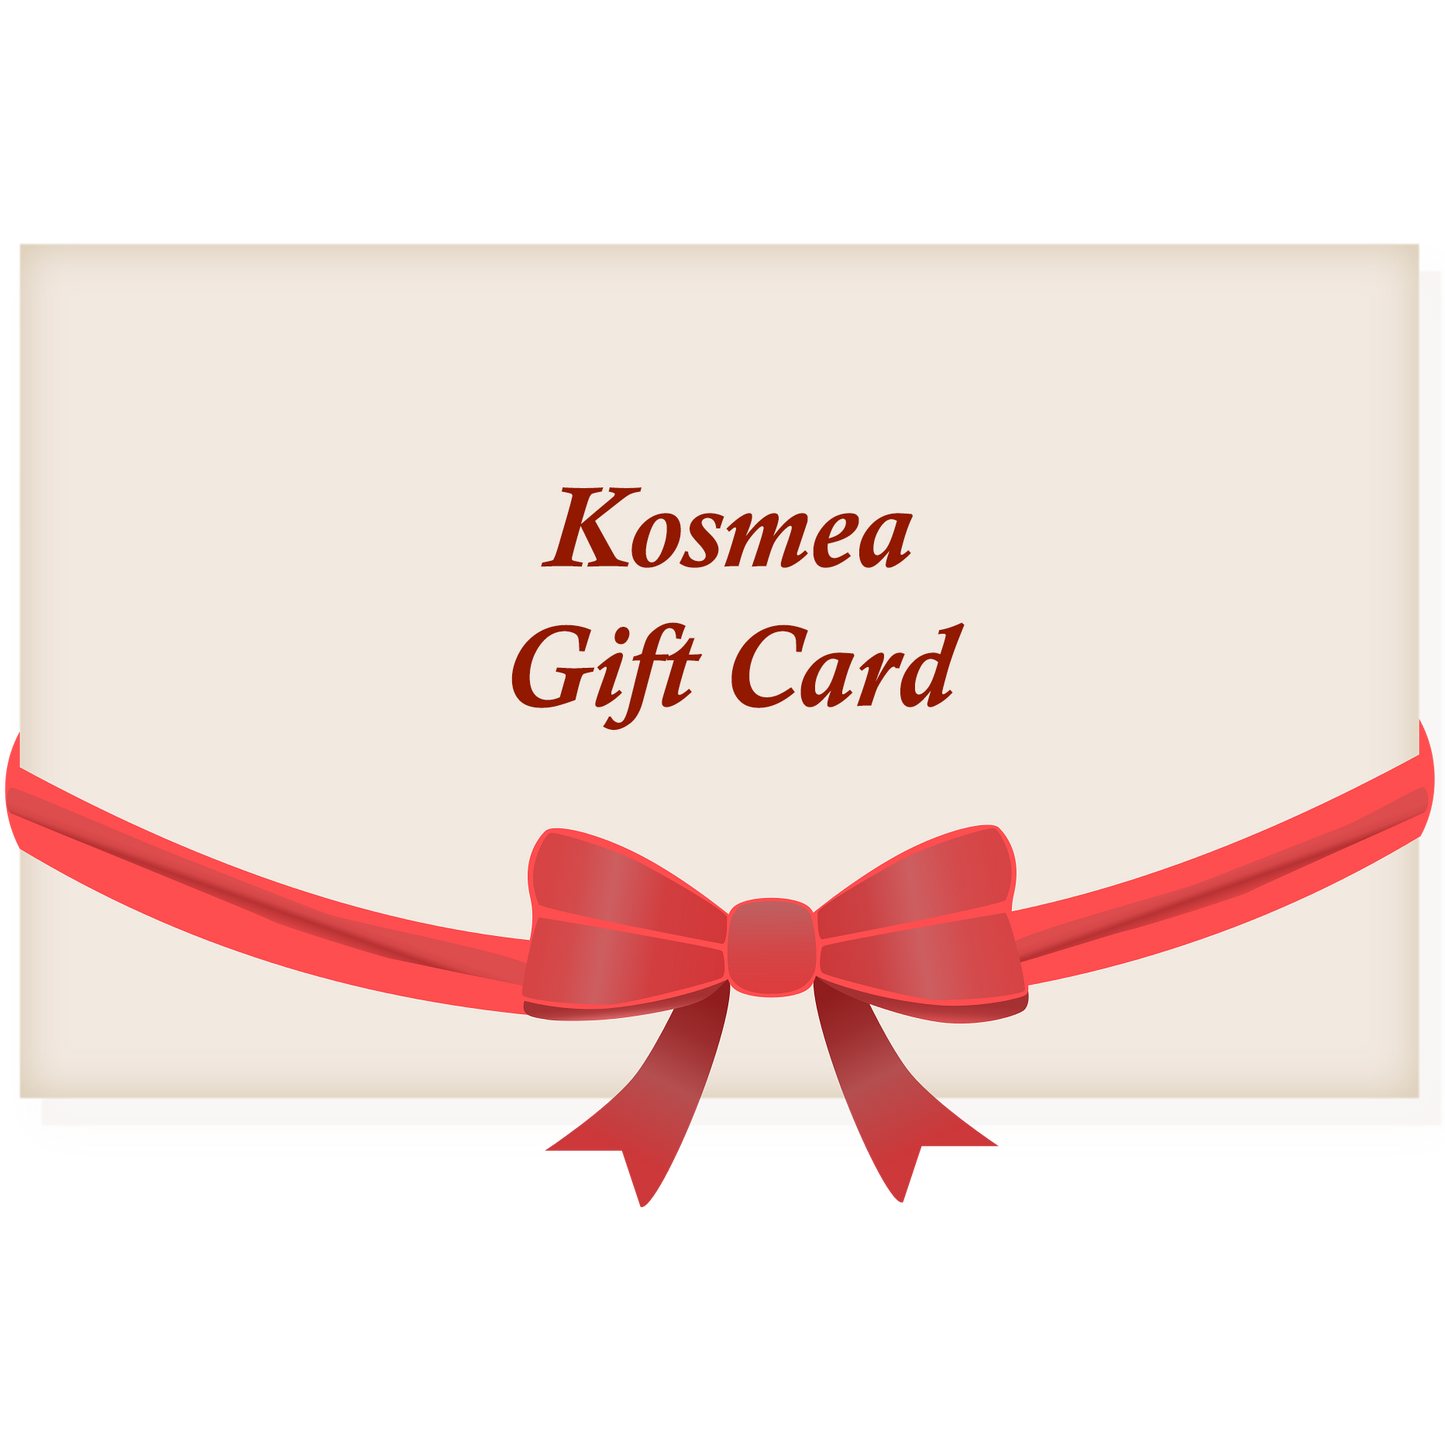 Kosmea Gift Card